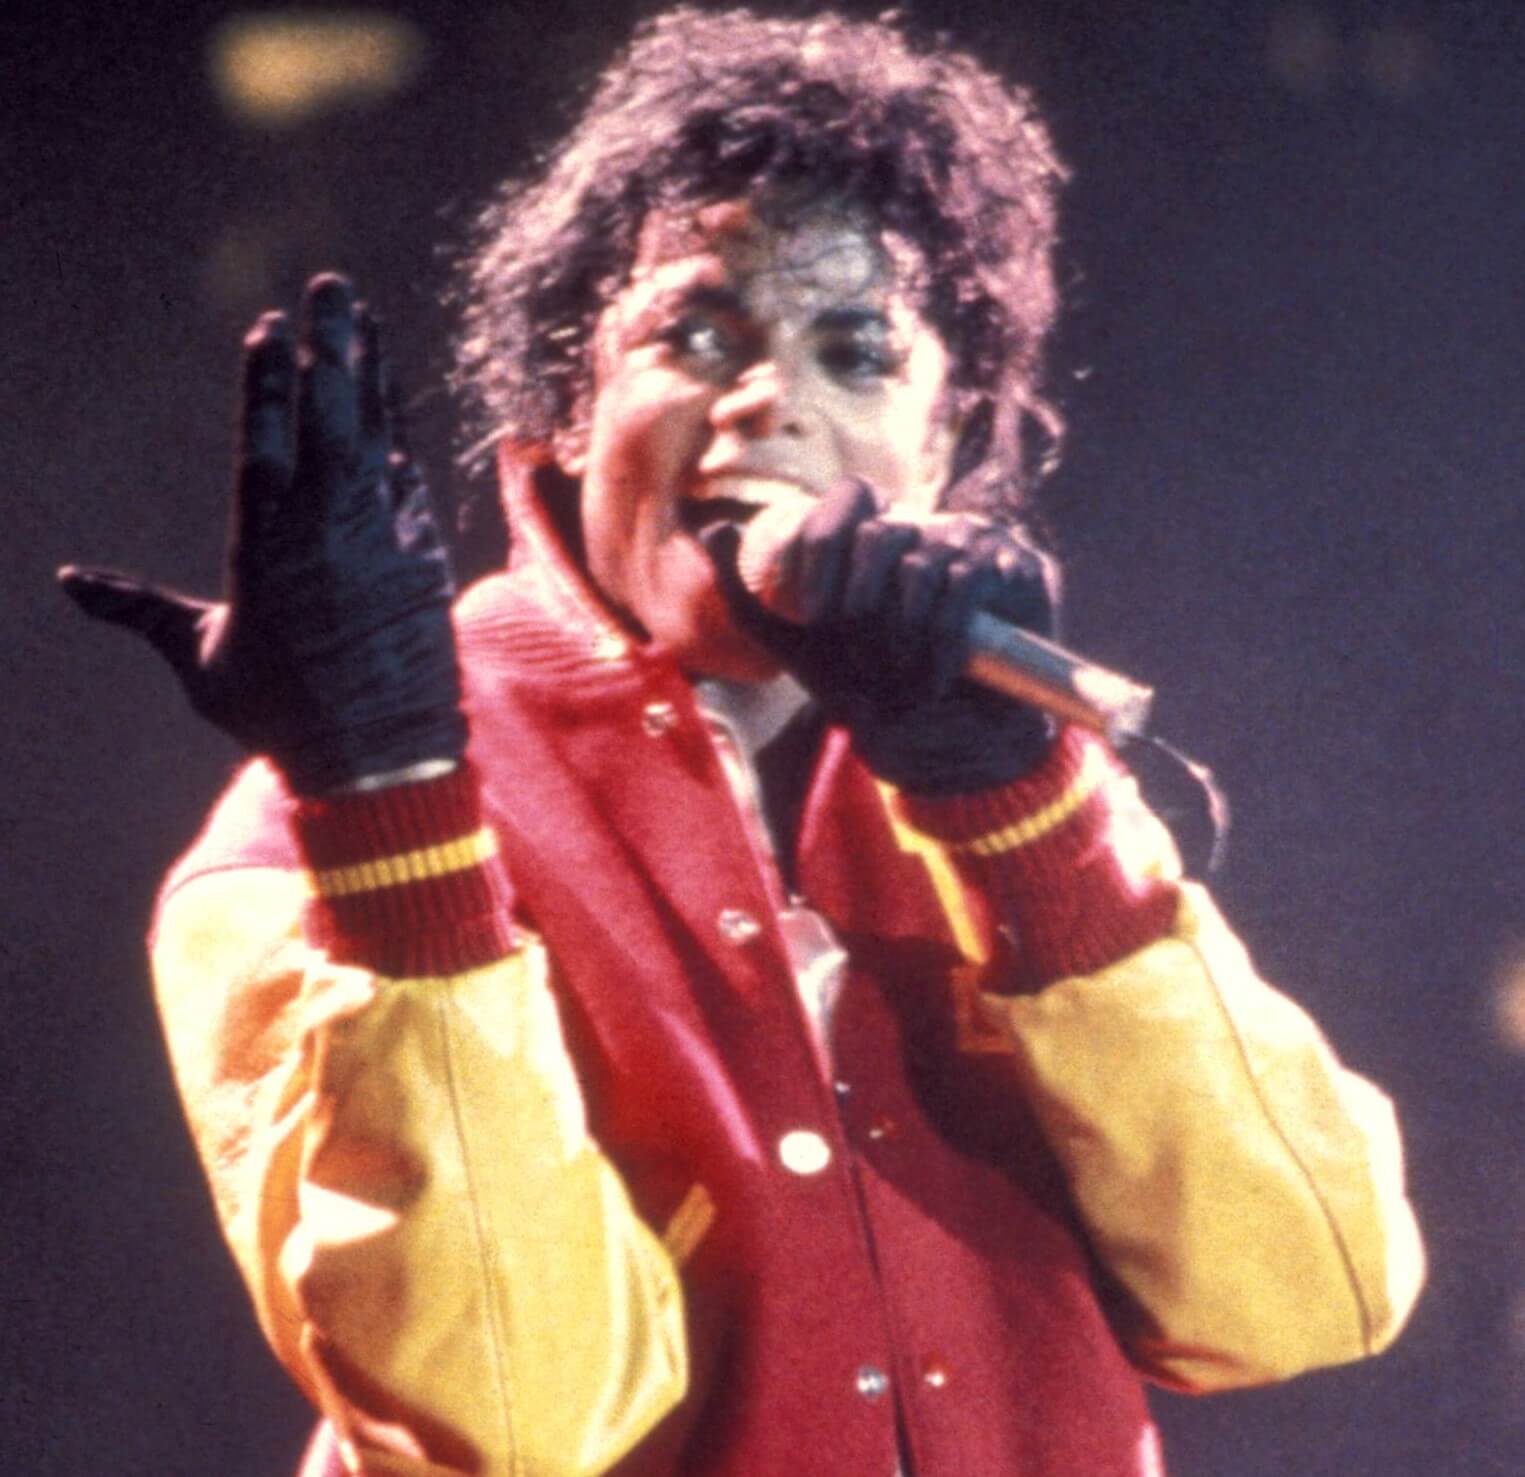 "Bad" star Michael Jackson wearing red